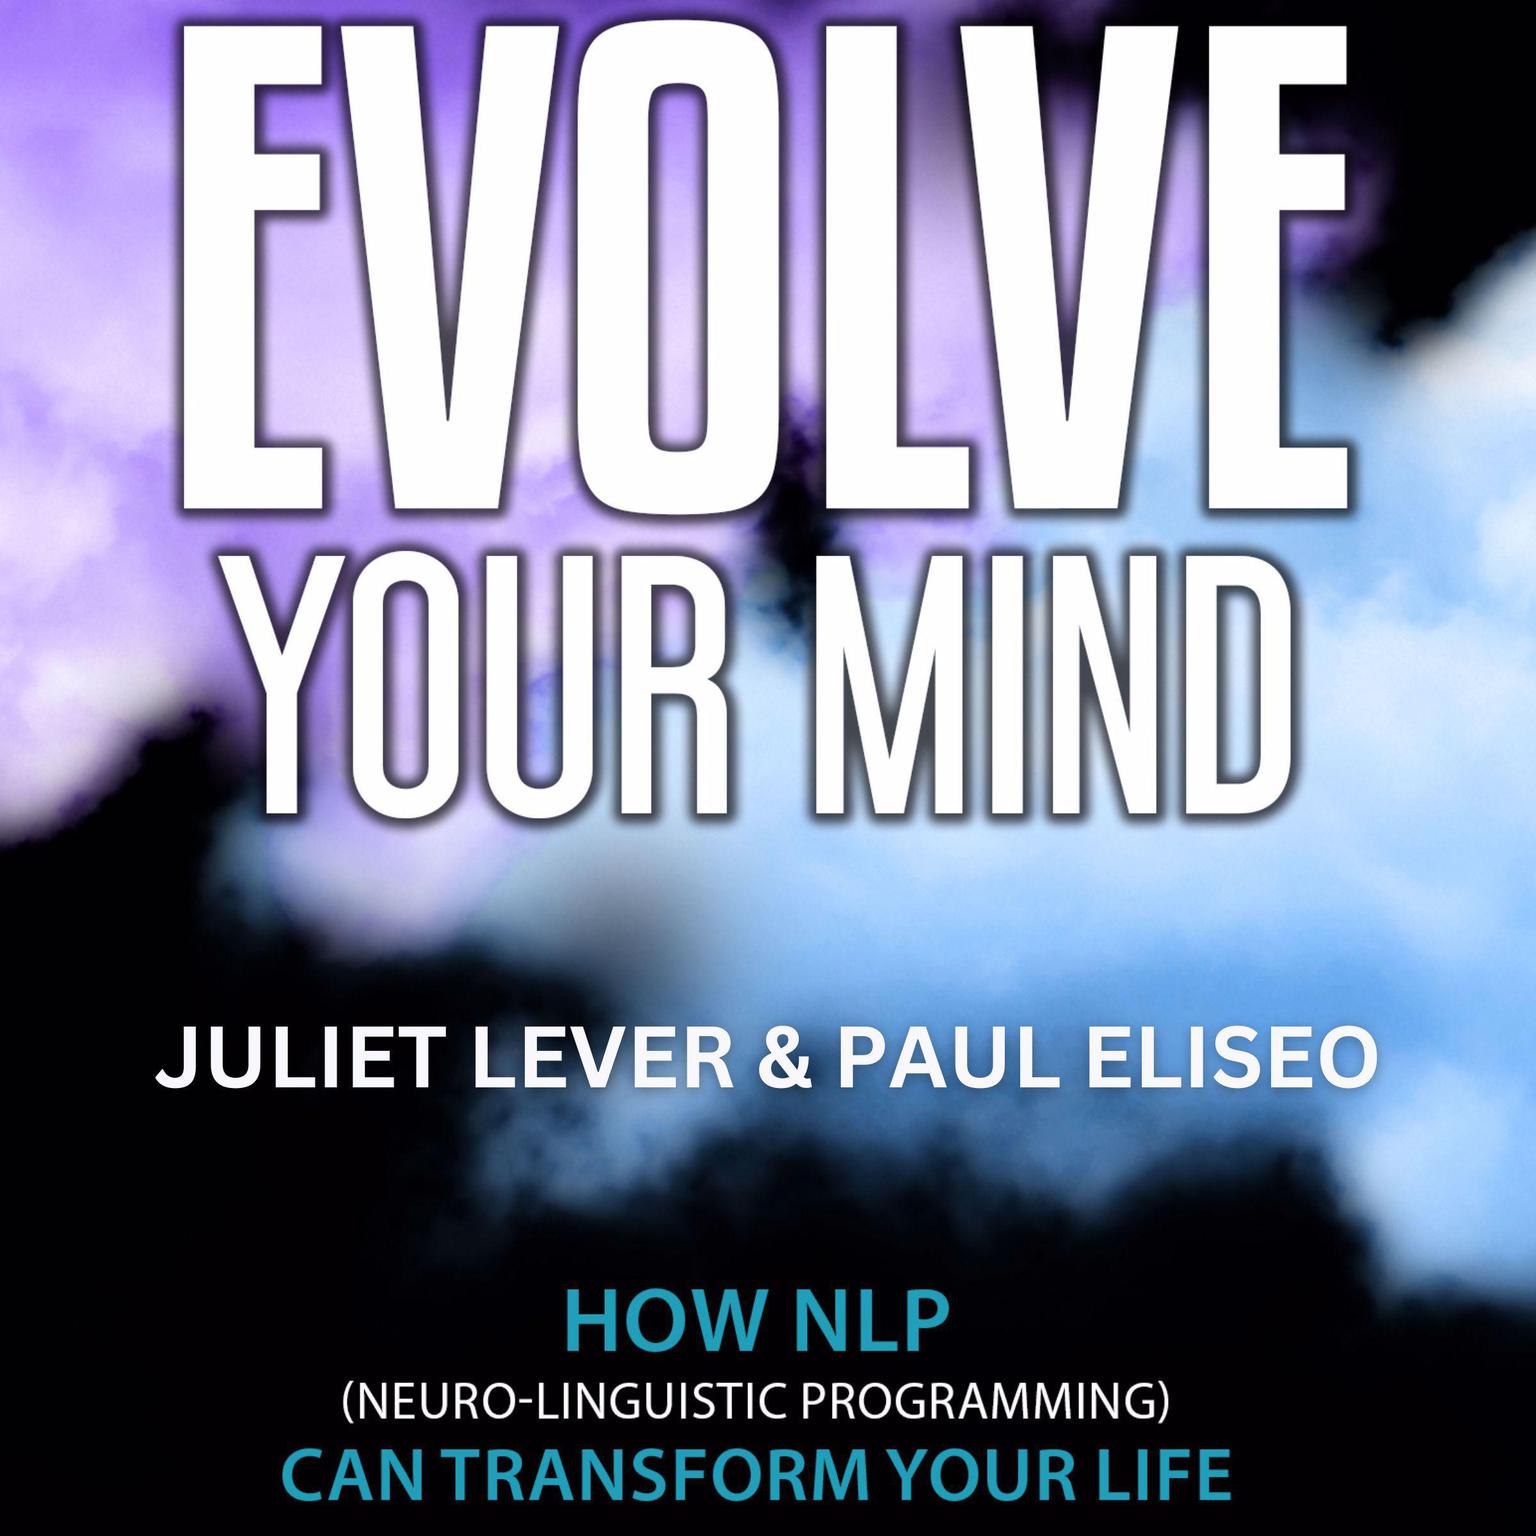 Evolve Your Mind Audiobook, by Juliet Lever